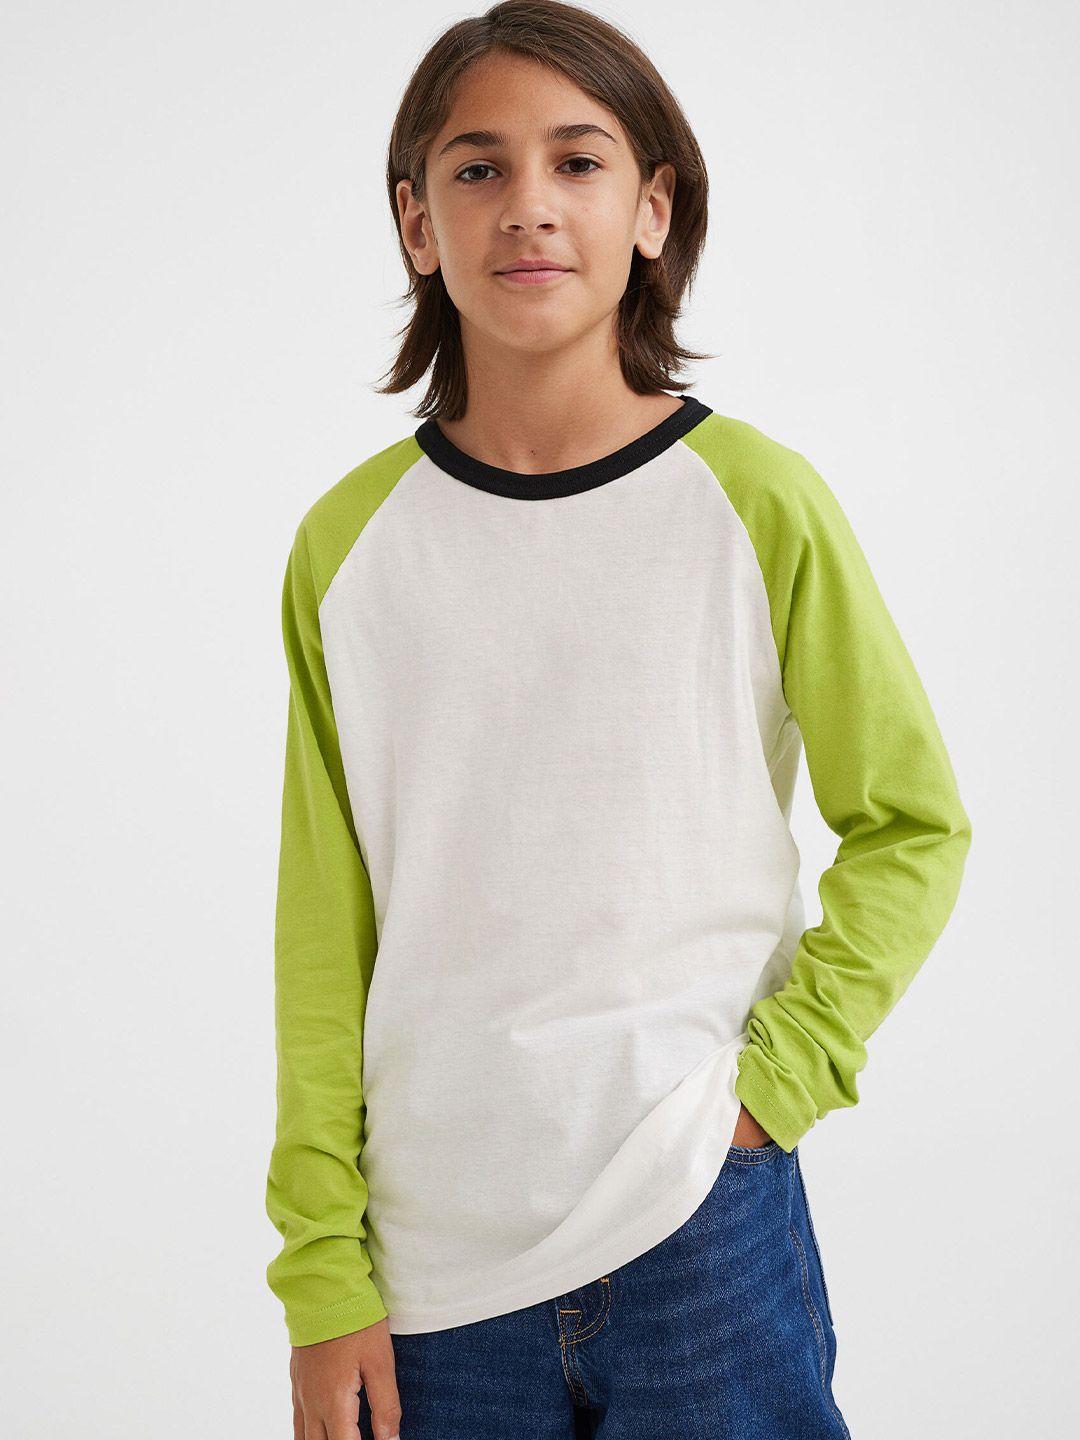 h&m boys white & green raw edge cotton t-shirt